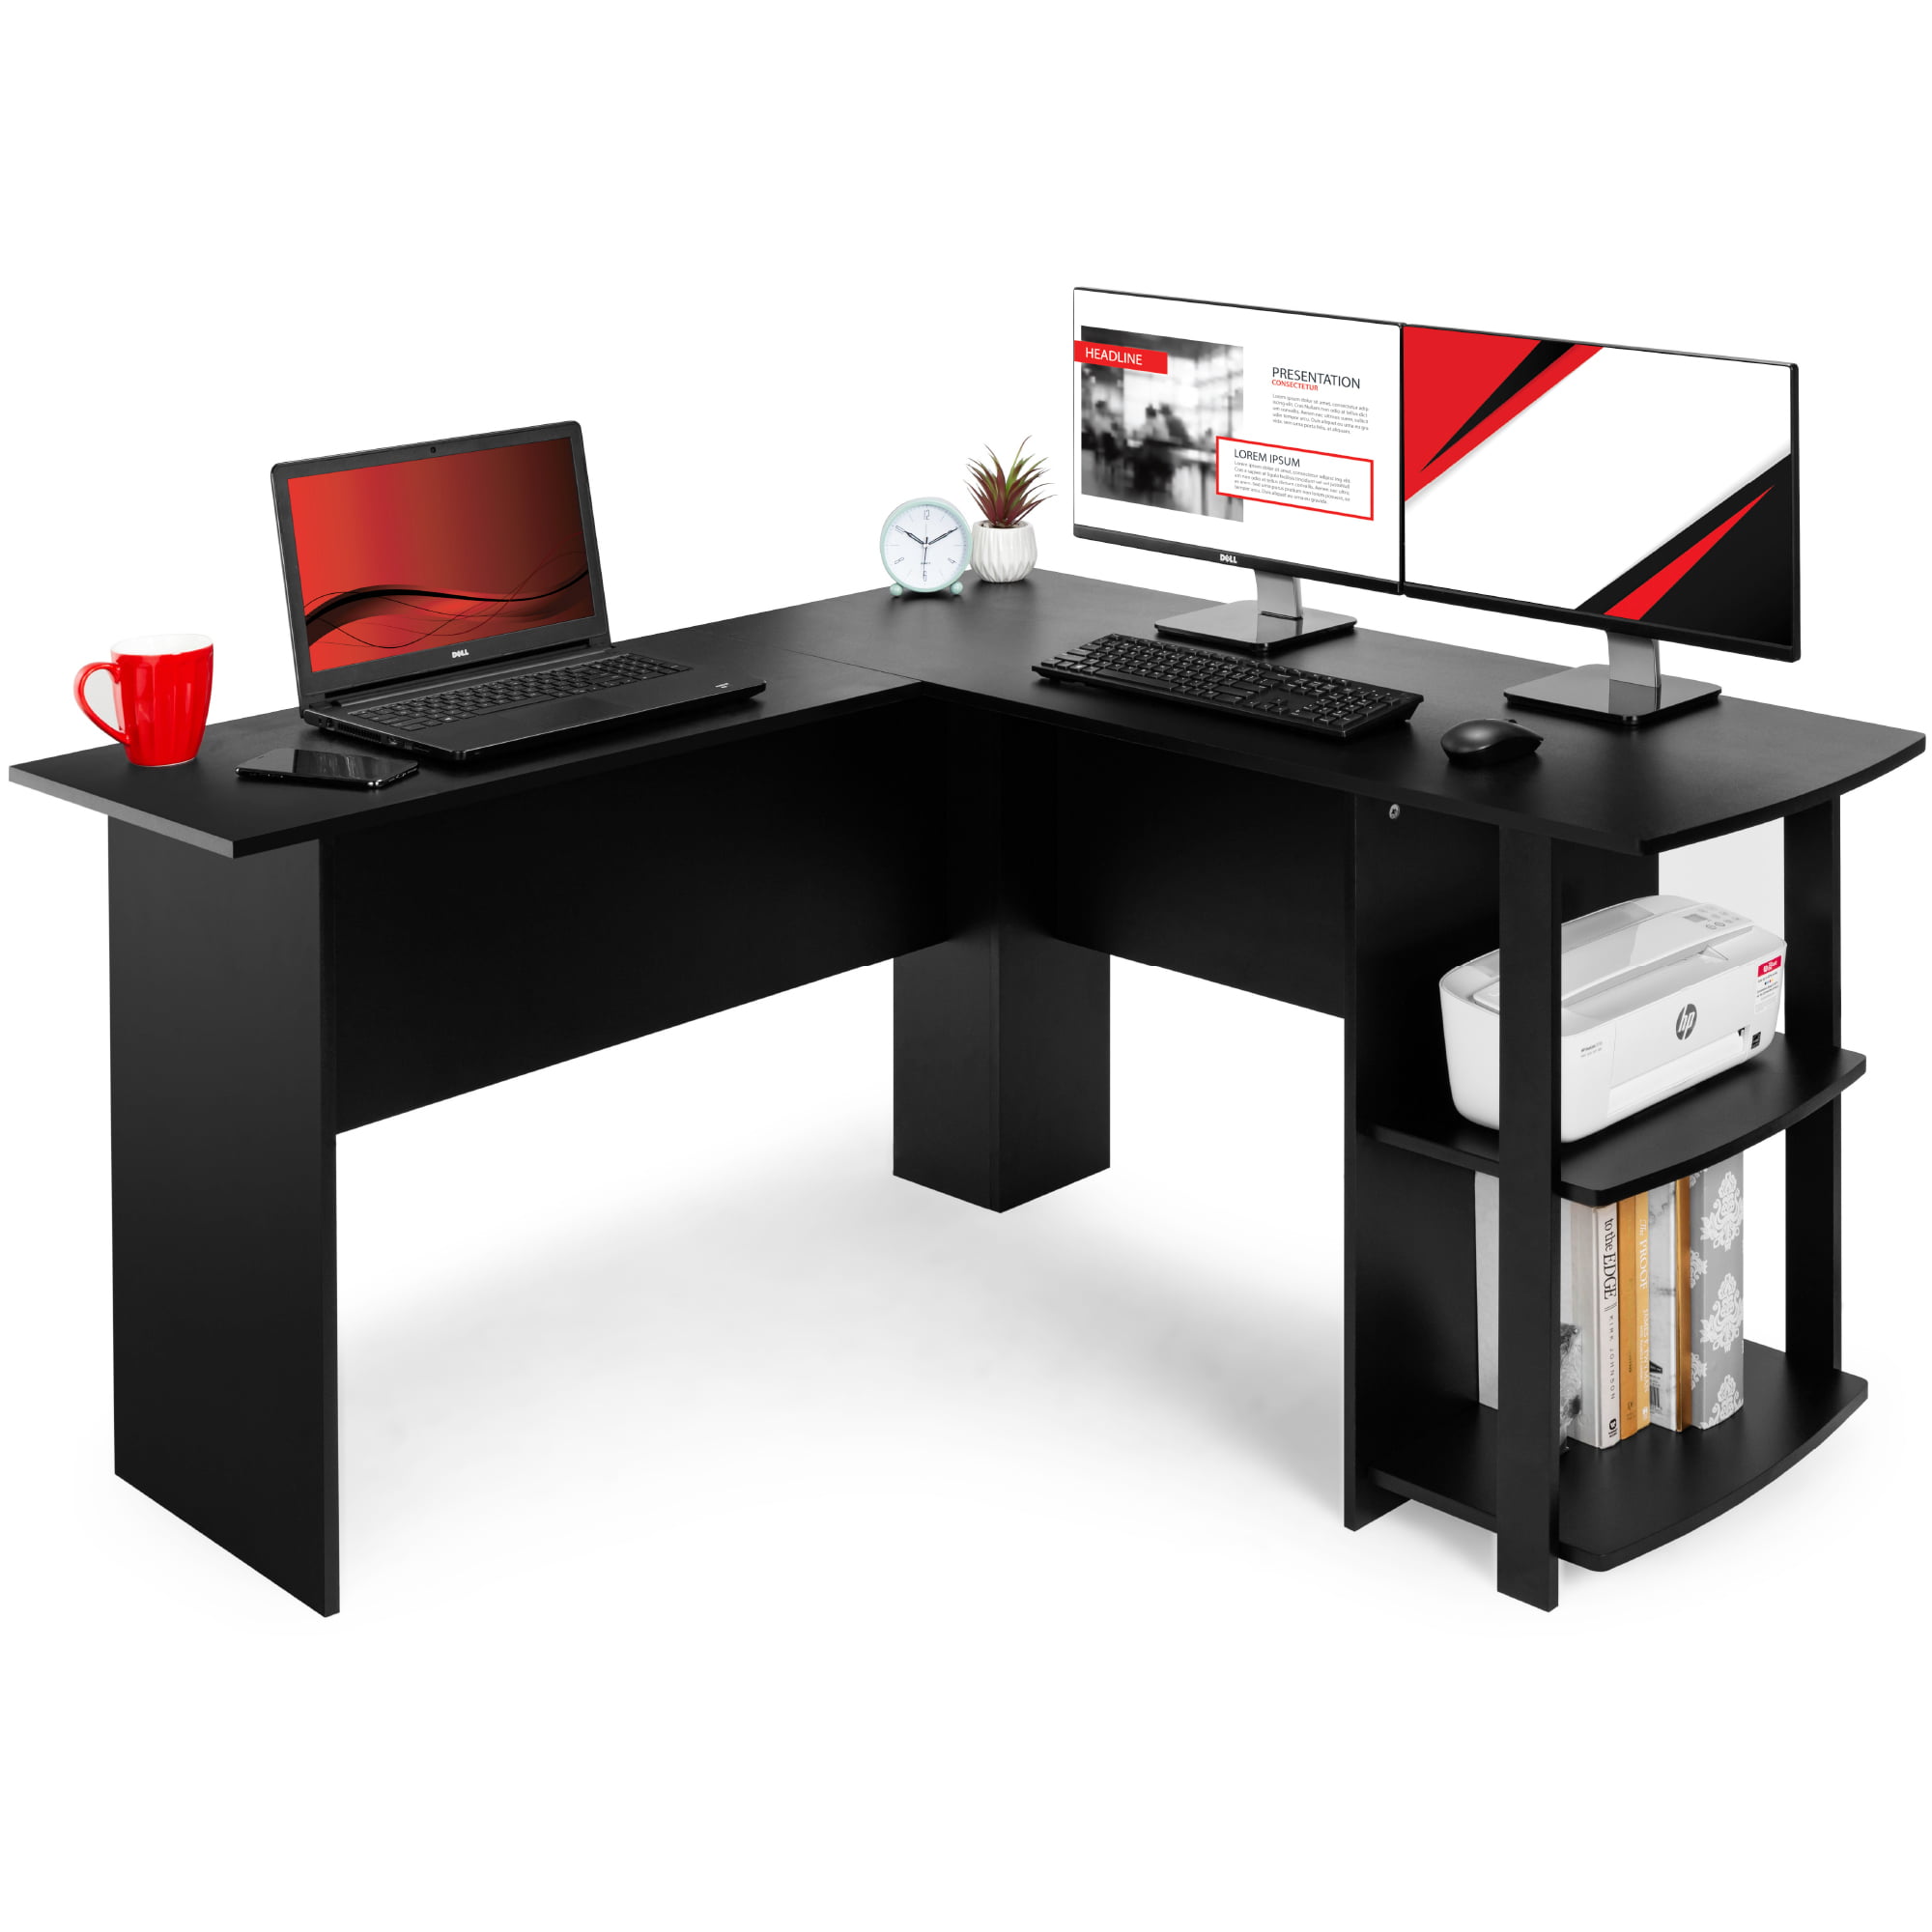 Details about   Home Office L-Shaped Corner Computer Desk PC Study Table Workstation Desk Table 